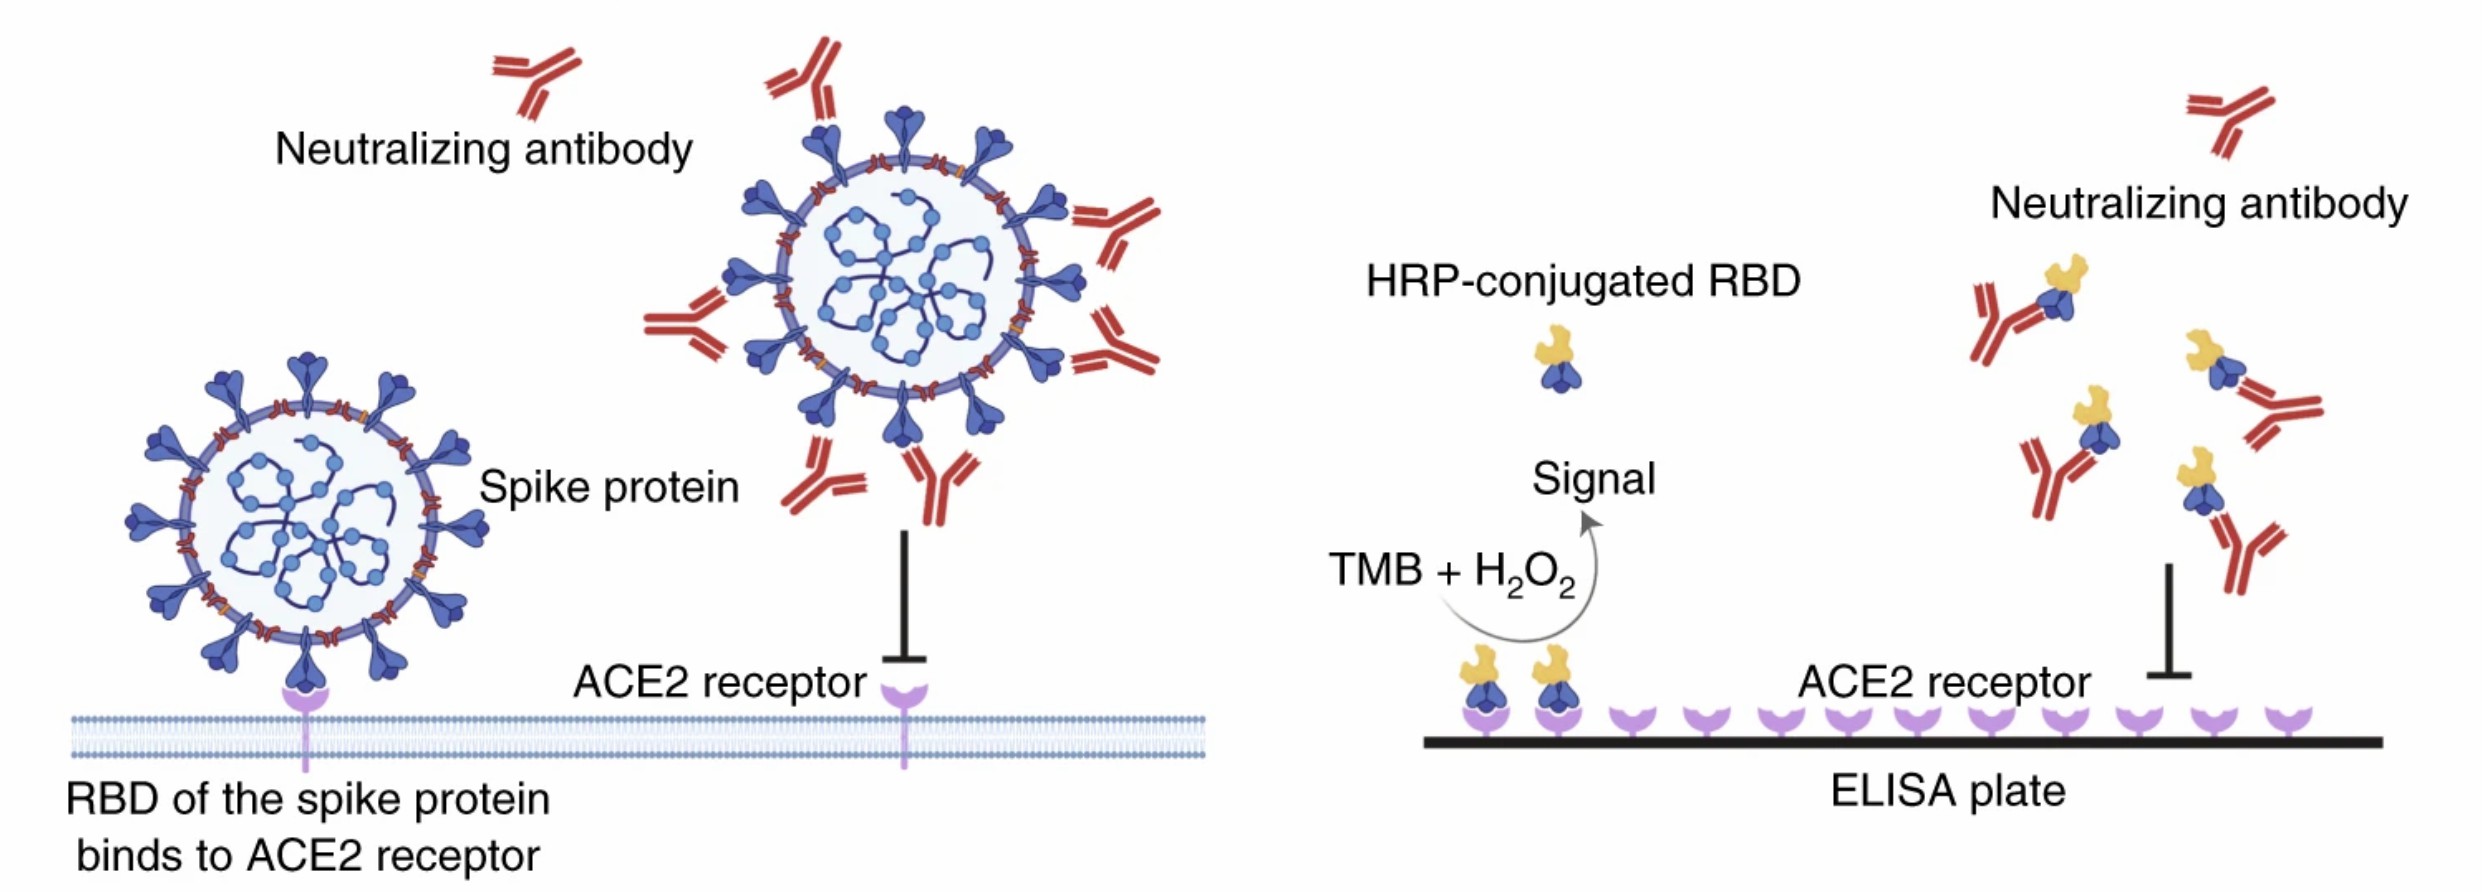 The neutralizing antibody blocks RBD binding with its ACE2 receptor. (Tan, et al., 2020)